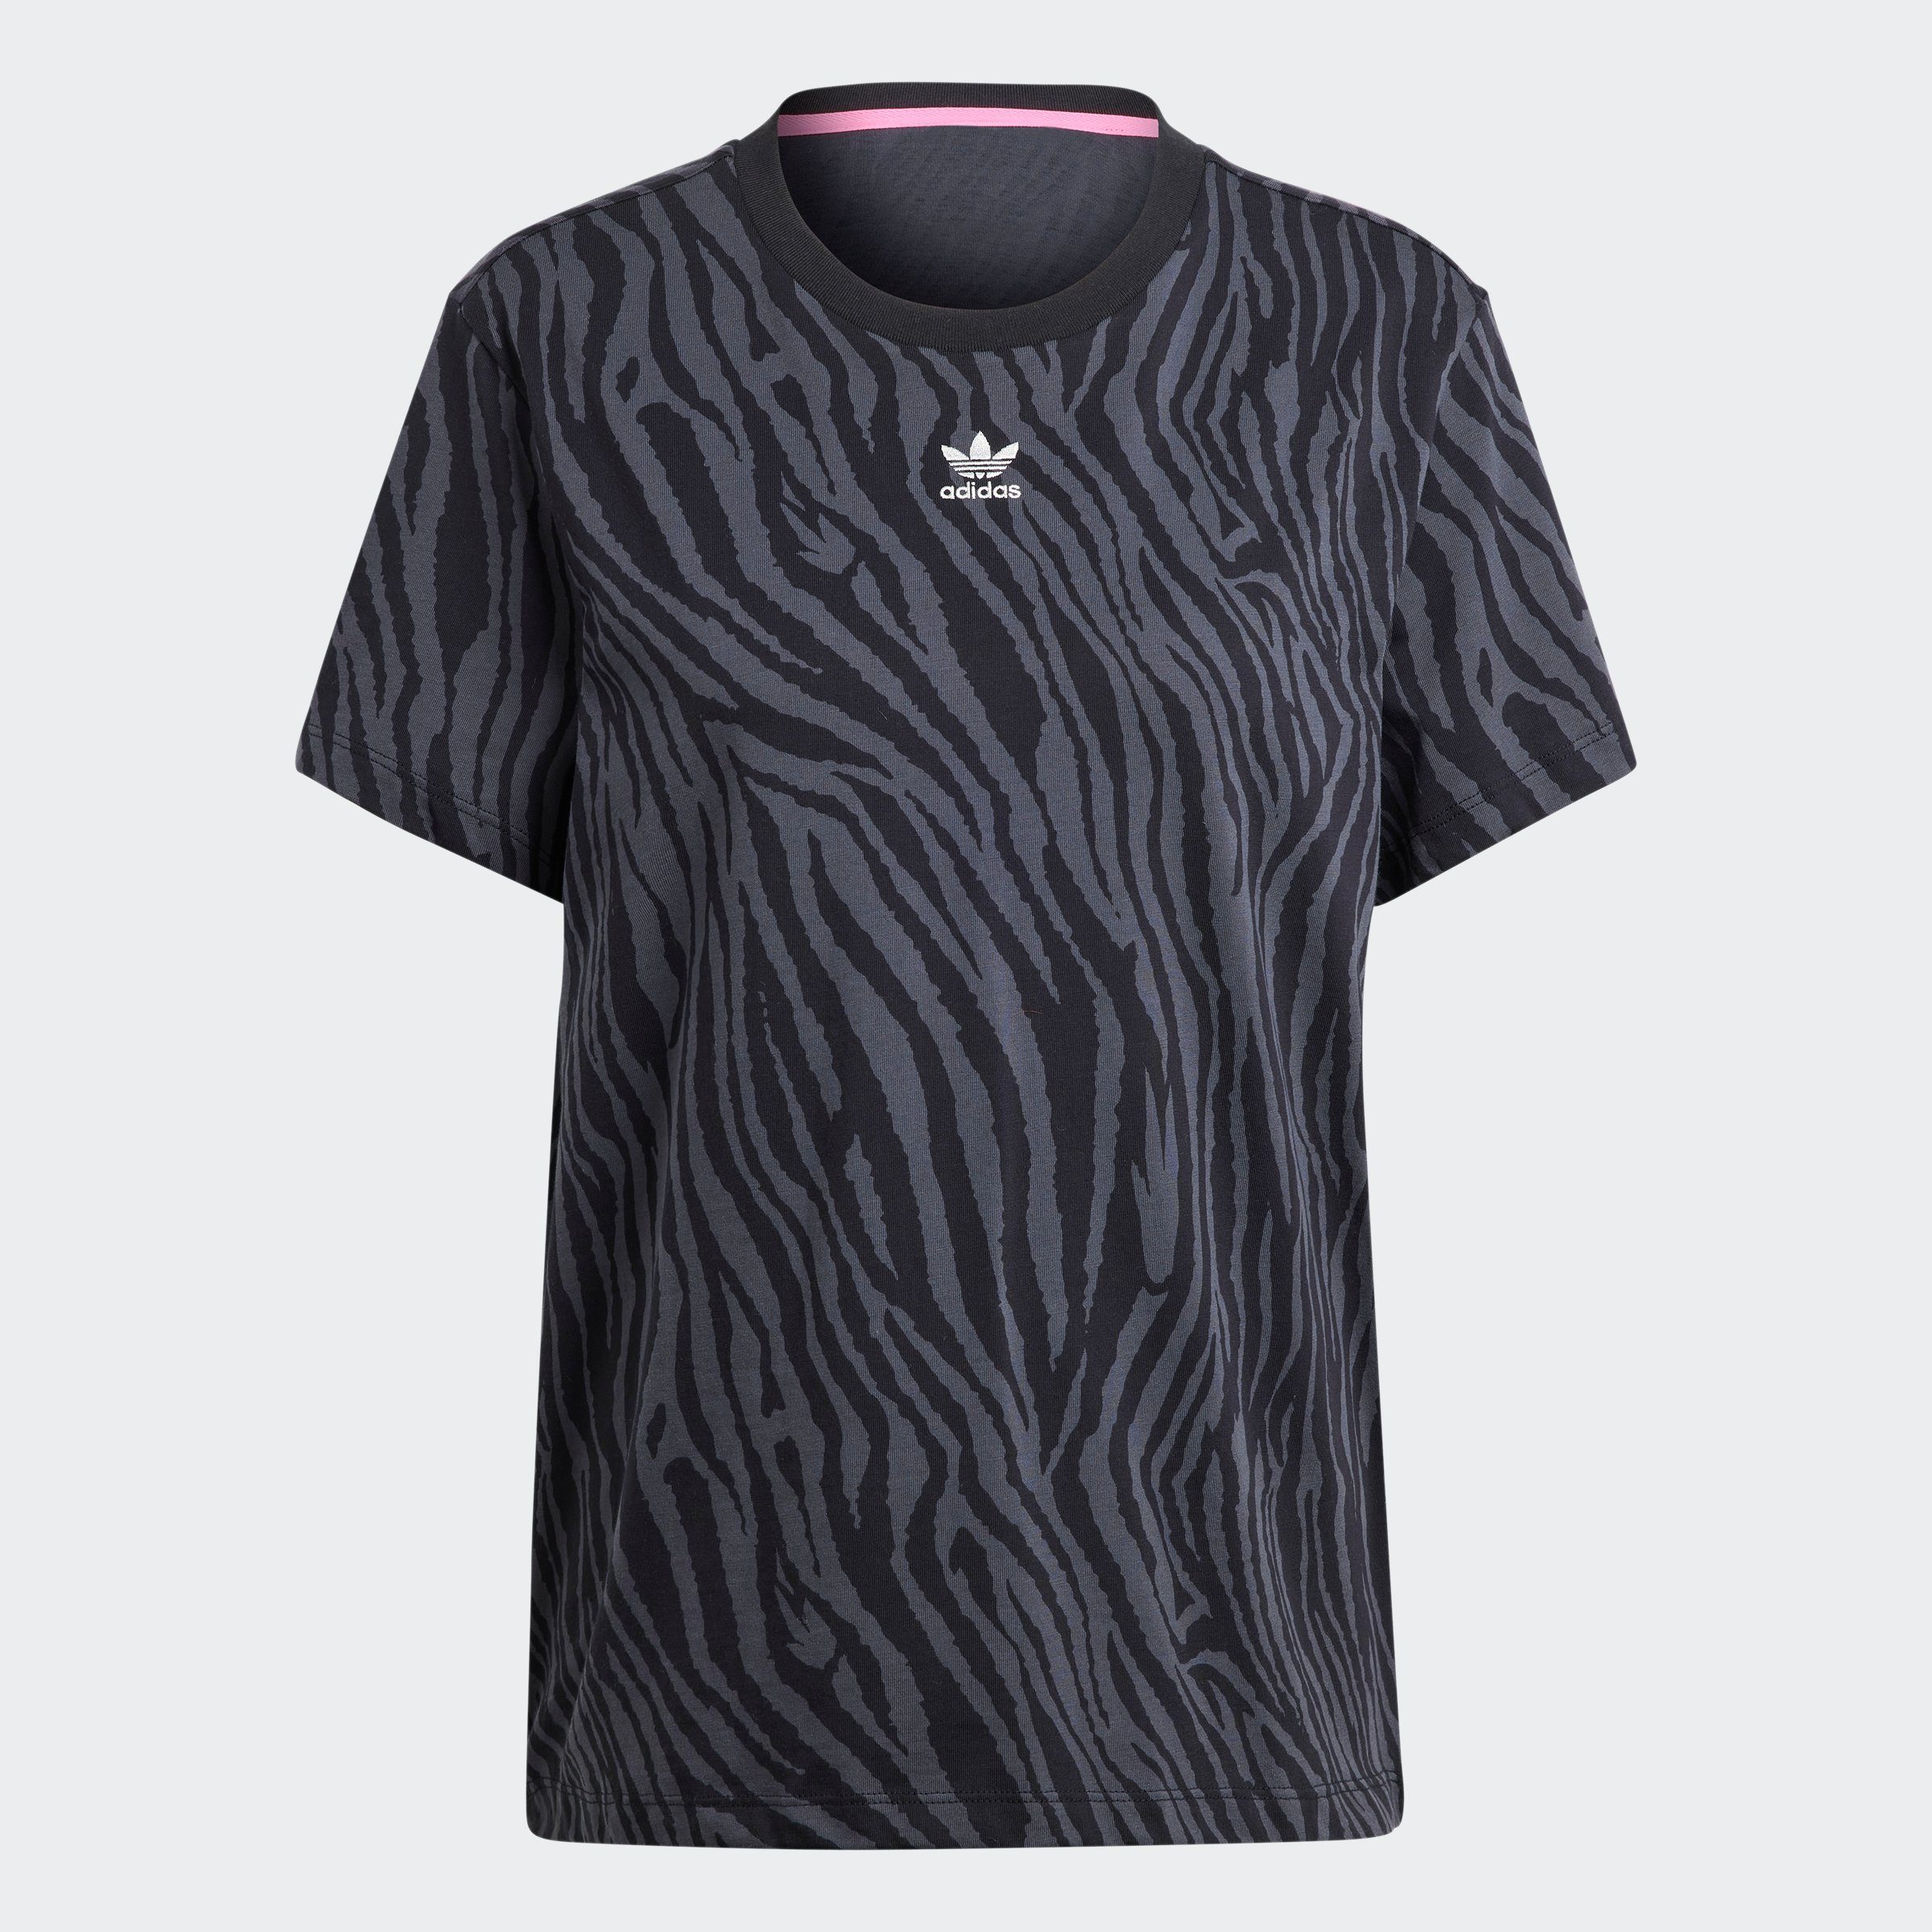 ZEBRA ESSENTIALS ANIMAL T-Shirt Originals adidas PRINT ALLOVER